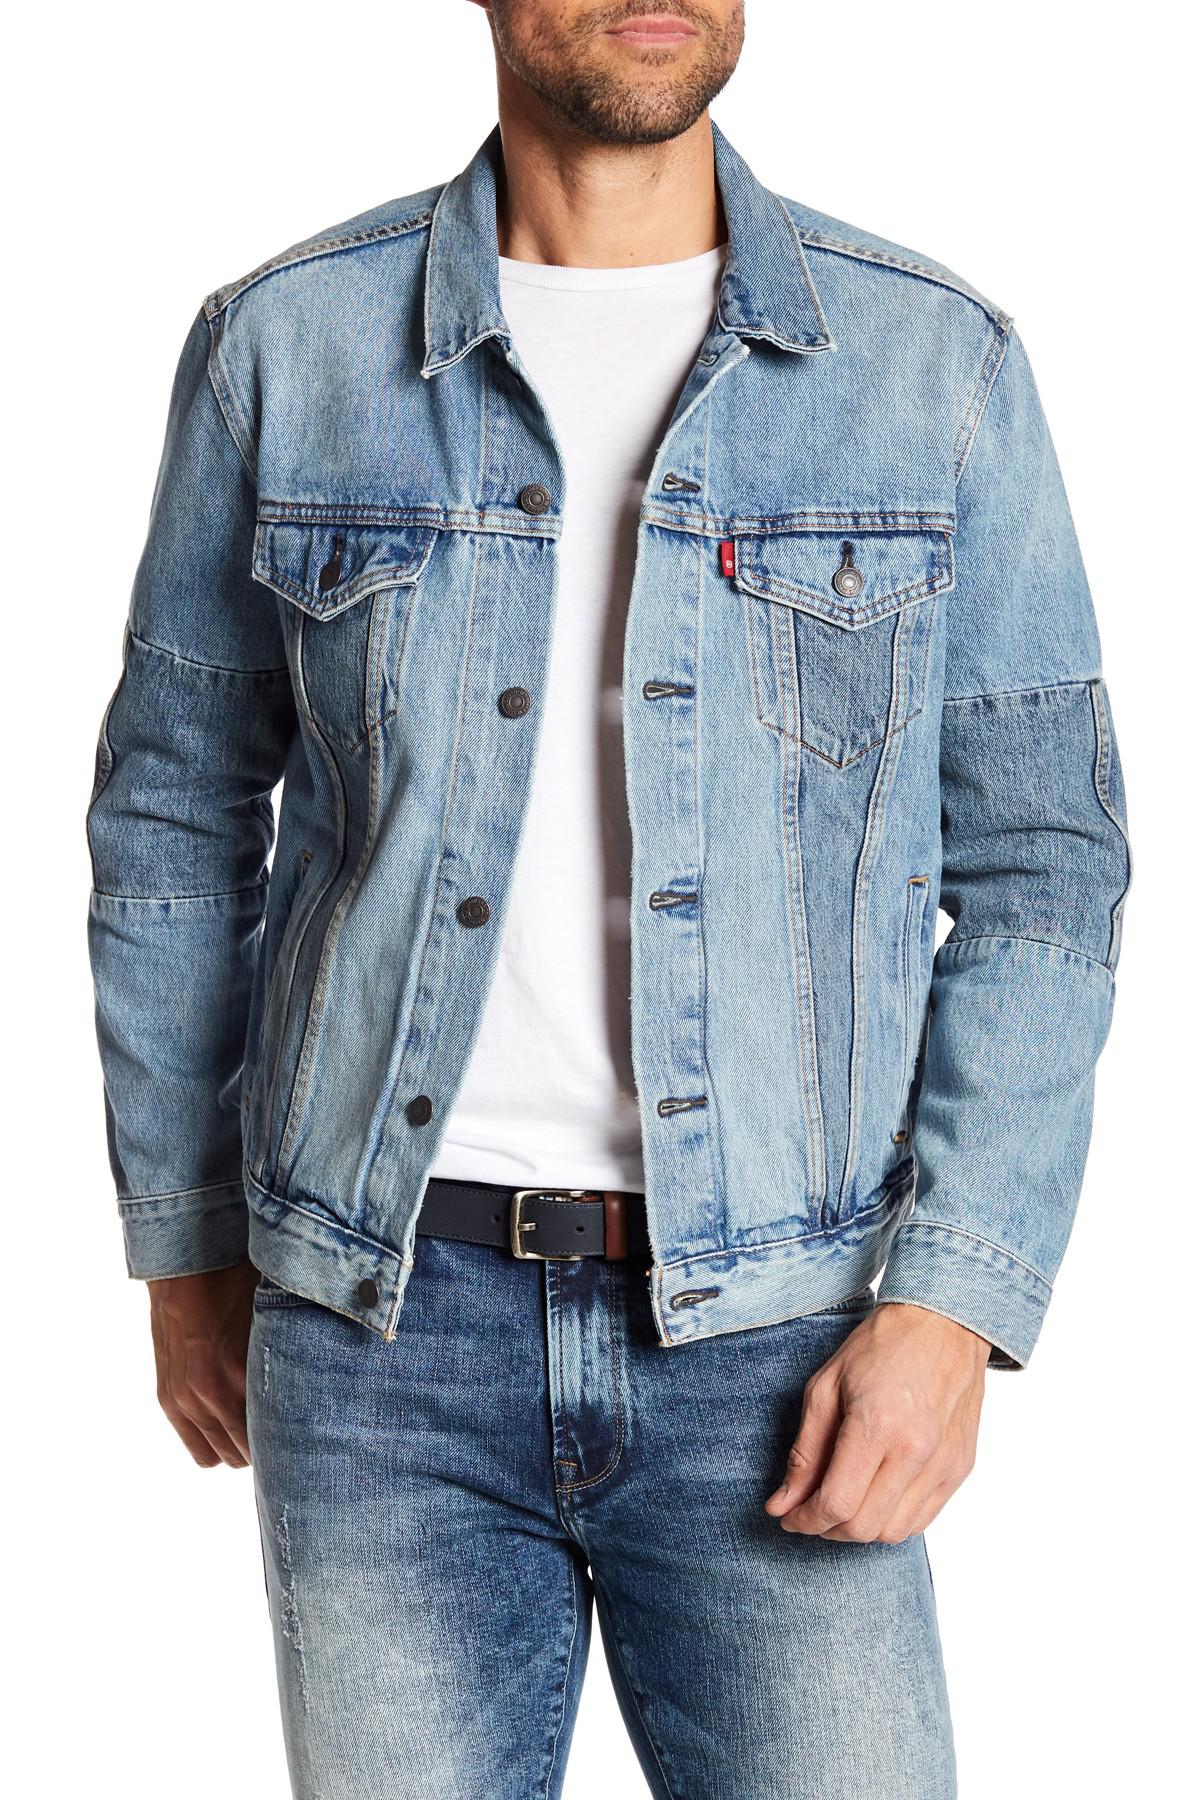 Levi's Altered Piece Good Trucker Denim Jacket in Blue for Men - Lyst